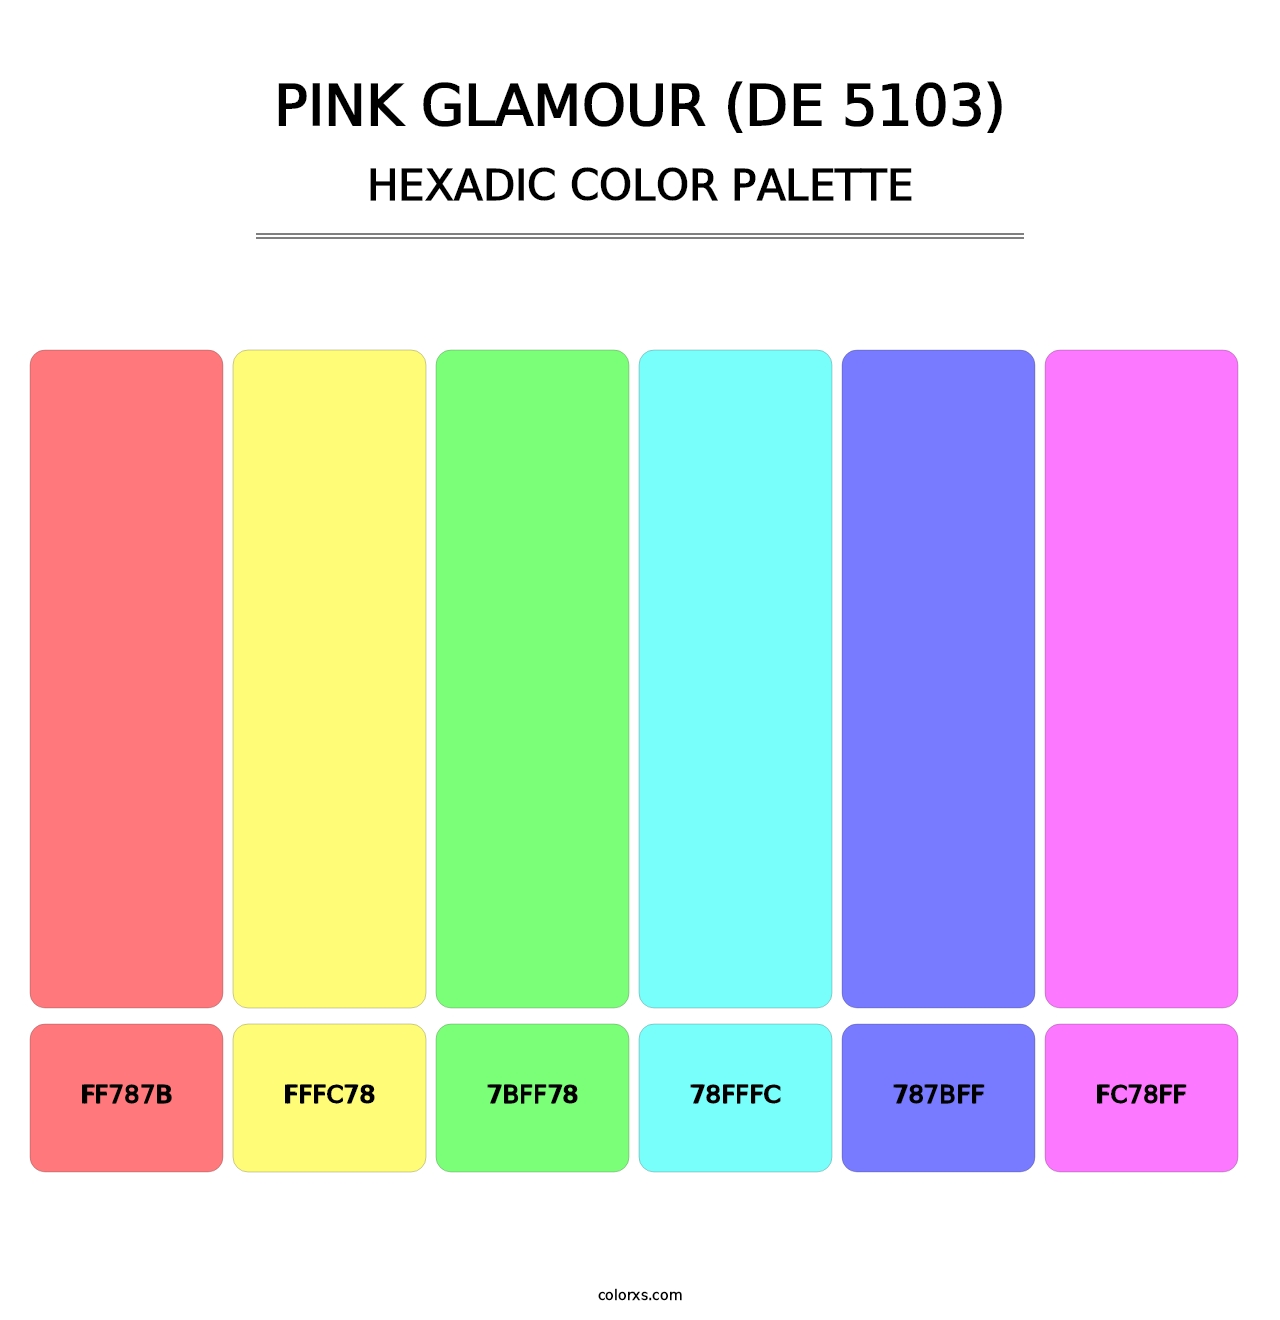 Pink Glamour (DE 5103) - Hexadic Color Palette